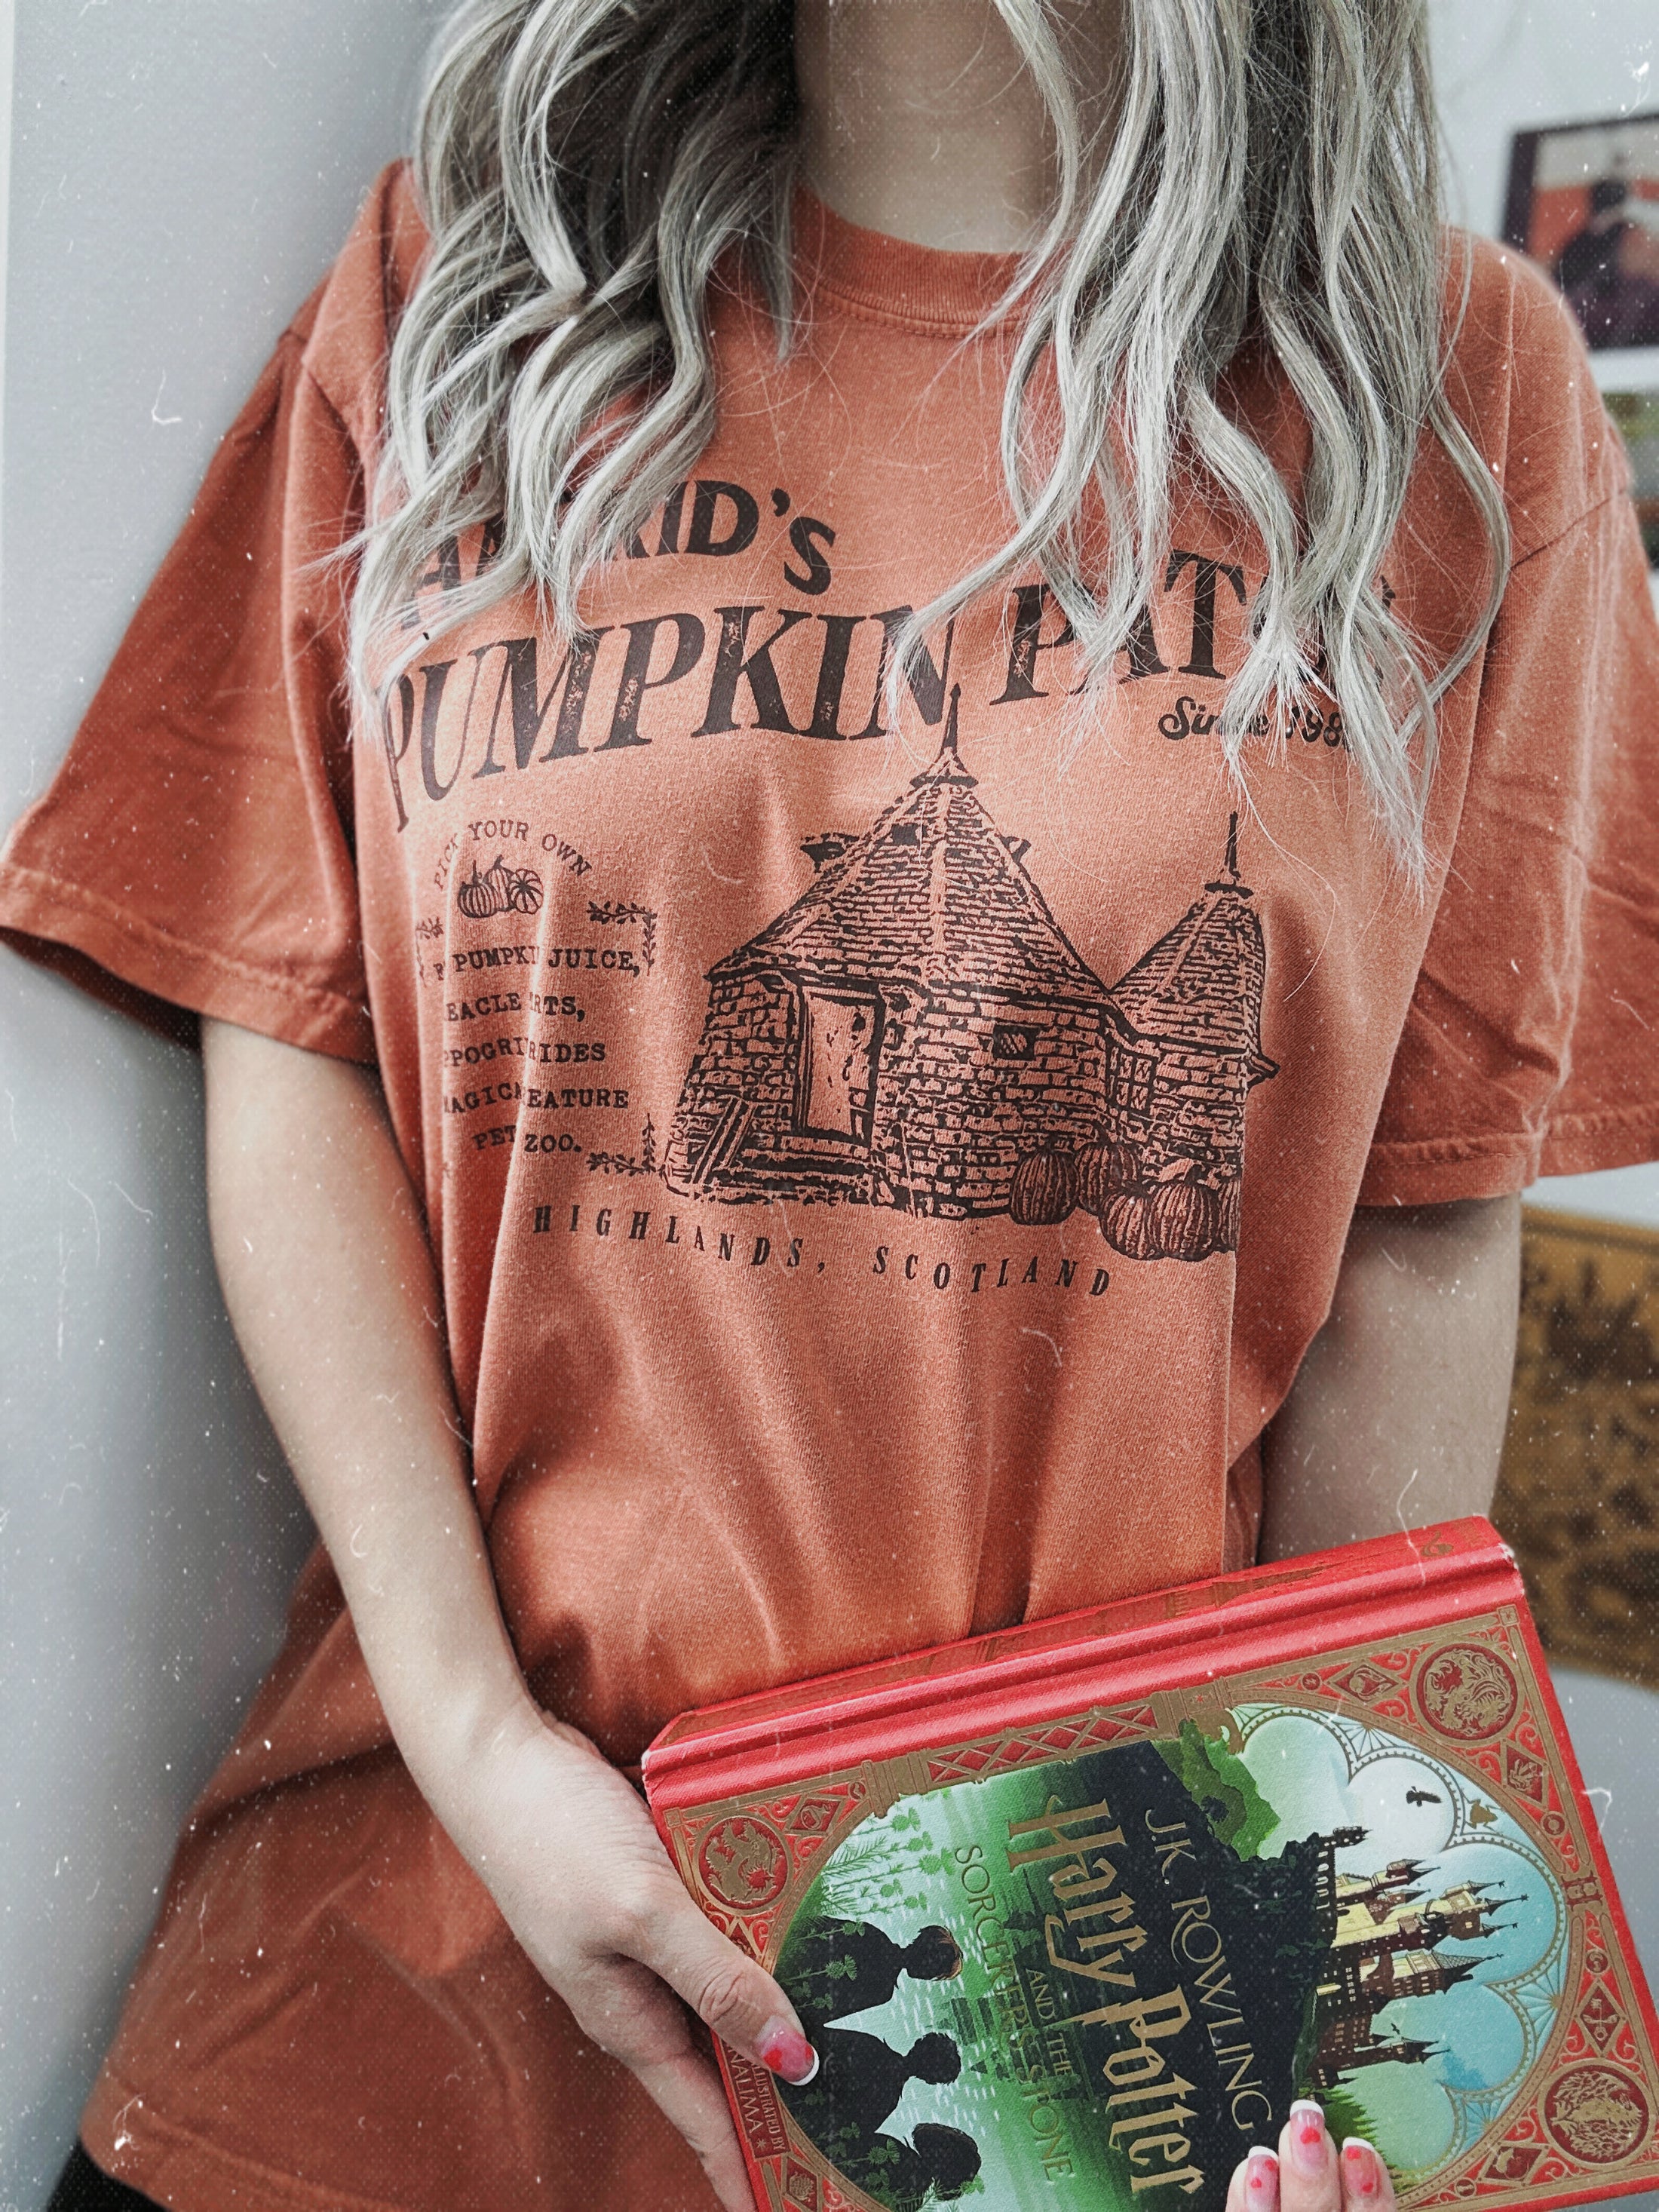 Hagrid's Pumpkin Patch Garment Dyed Tee